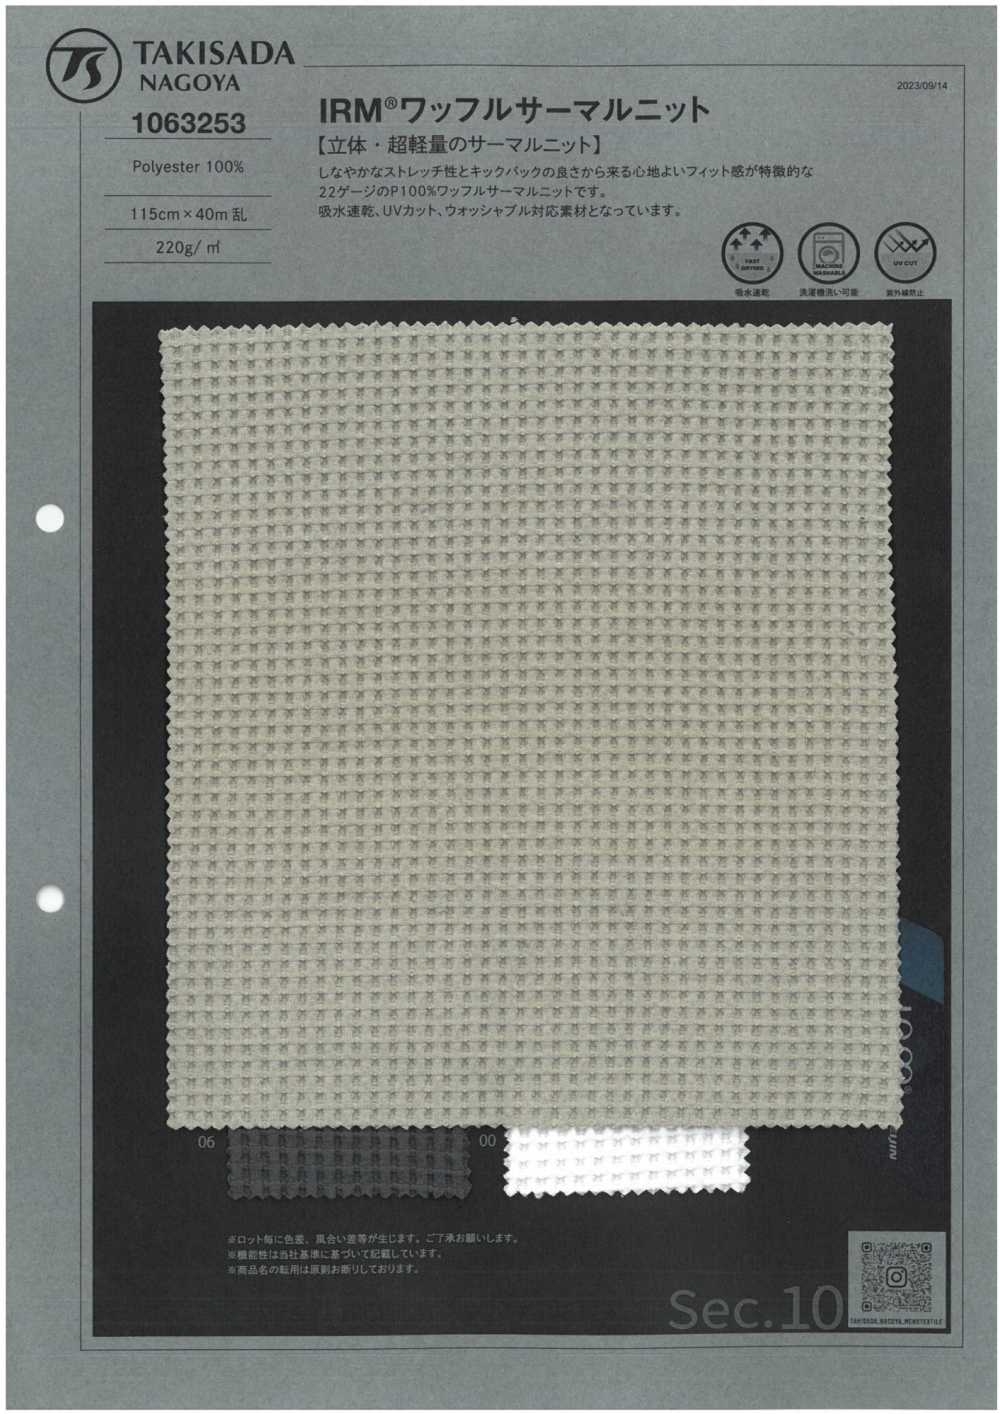 1063253 Vải Dệt Kim Vải Giữ Nhiệt Thermal đan Kiểu Waffle IRM® Takisada Nagoya